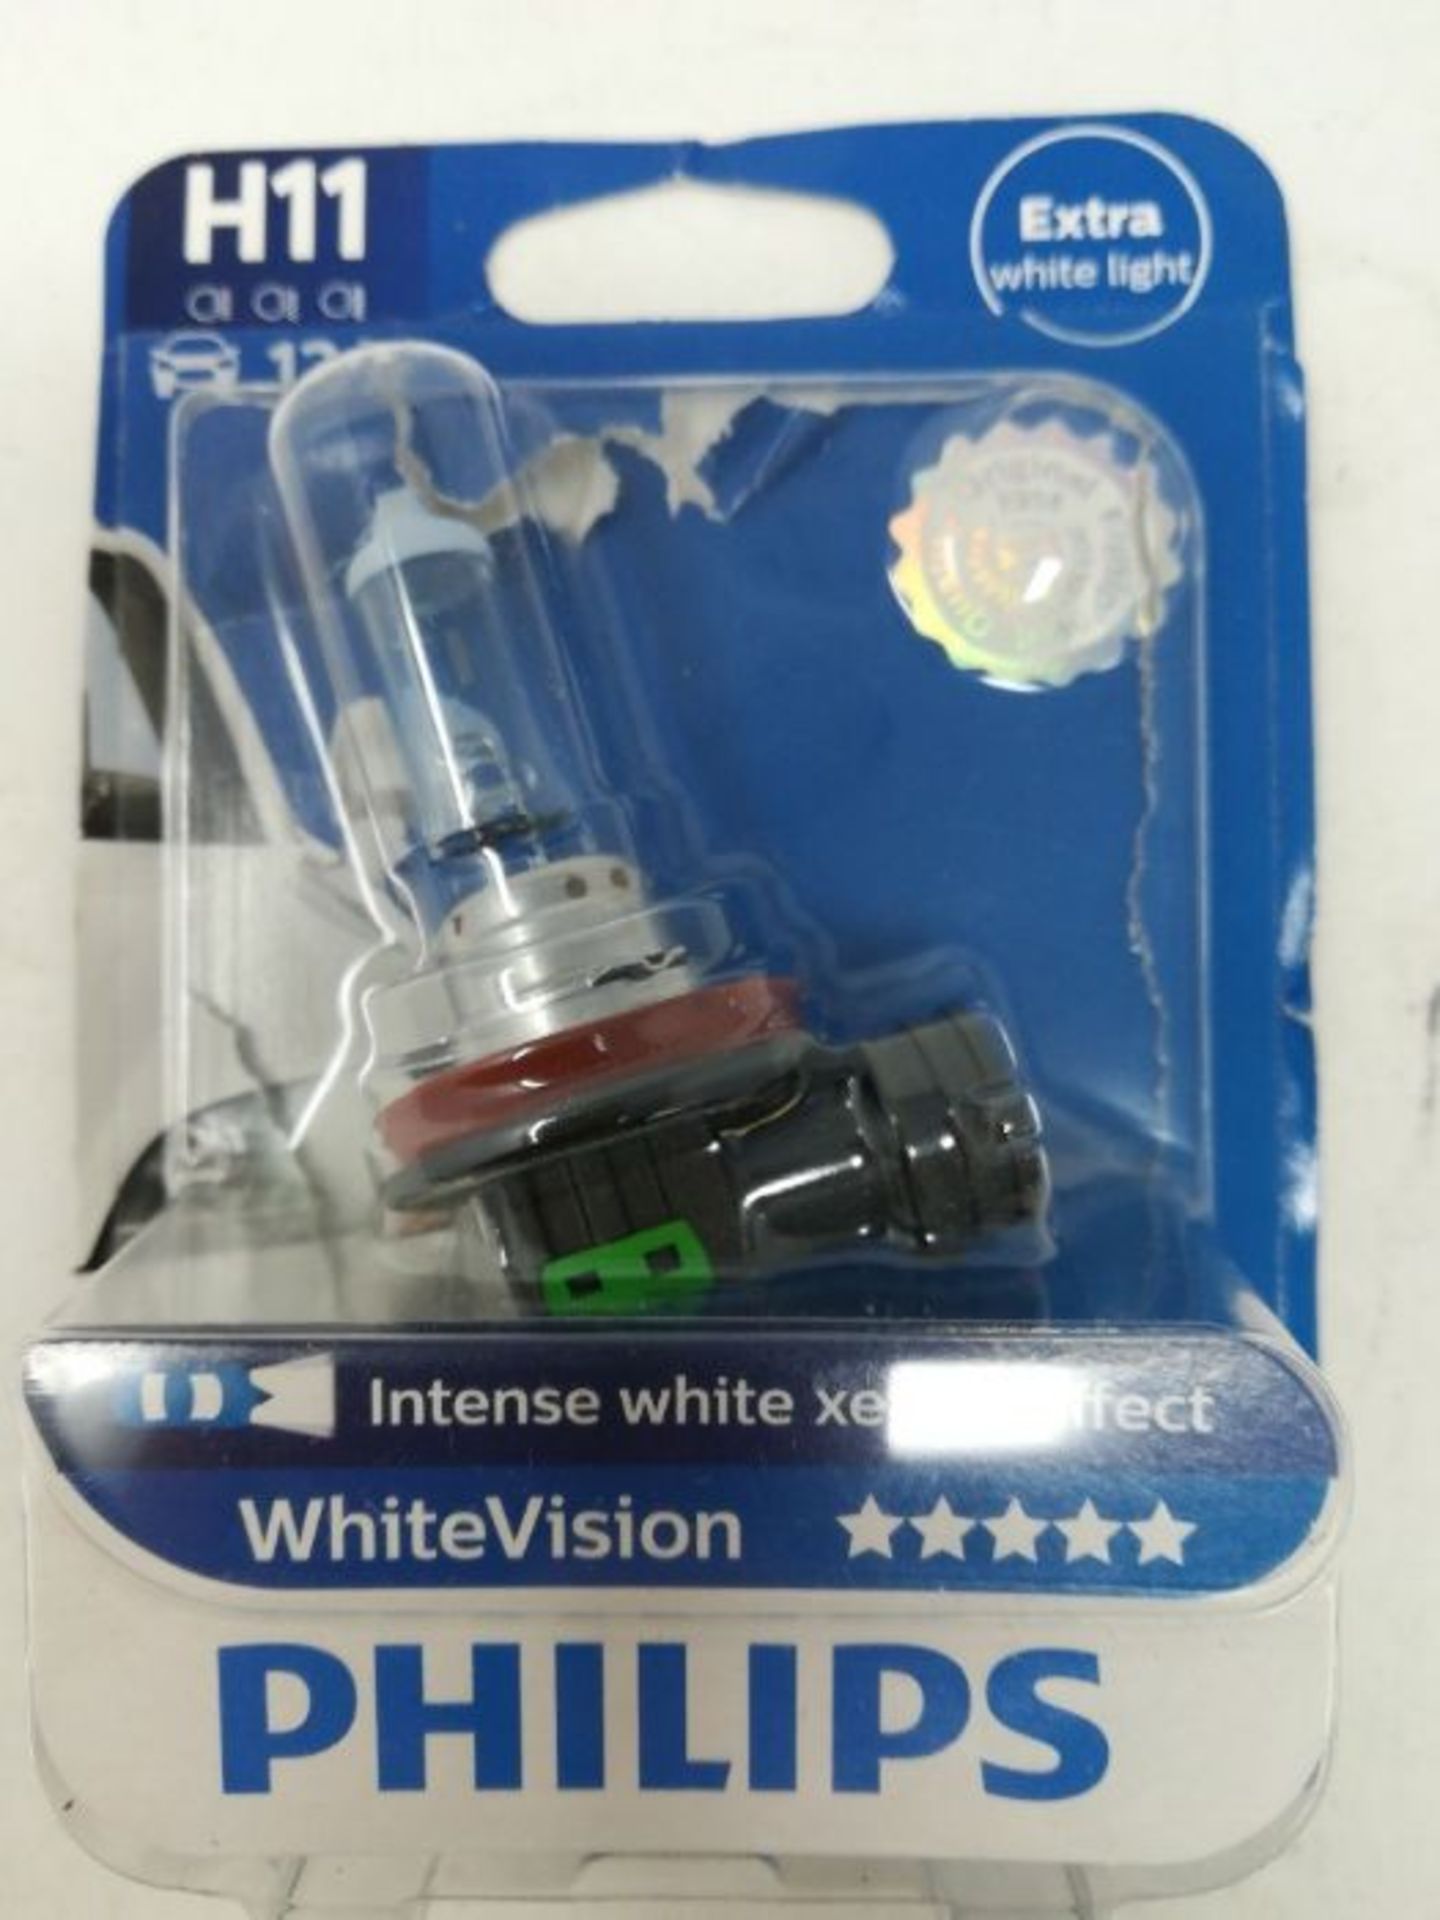 Philips WhiteVision Xenon effect H11 headlight bulb 12362WHVB1, single blister - Image 2 of 2